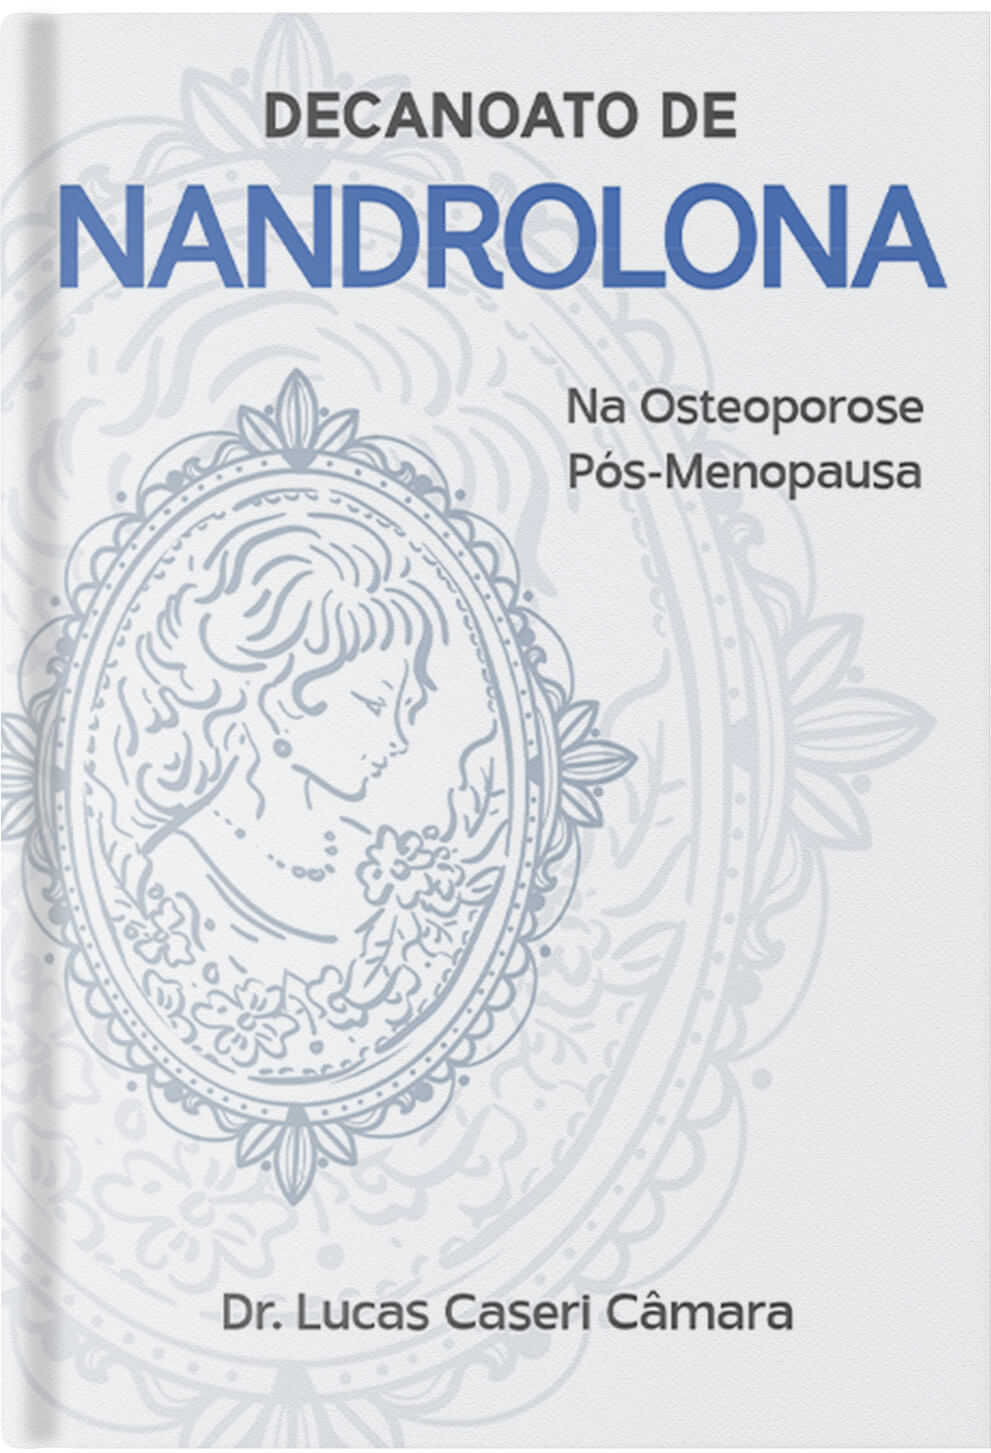 Mockup Livro Decanoato de Nandrolona